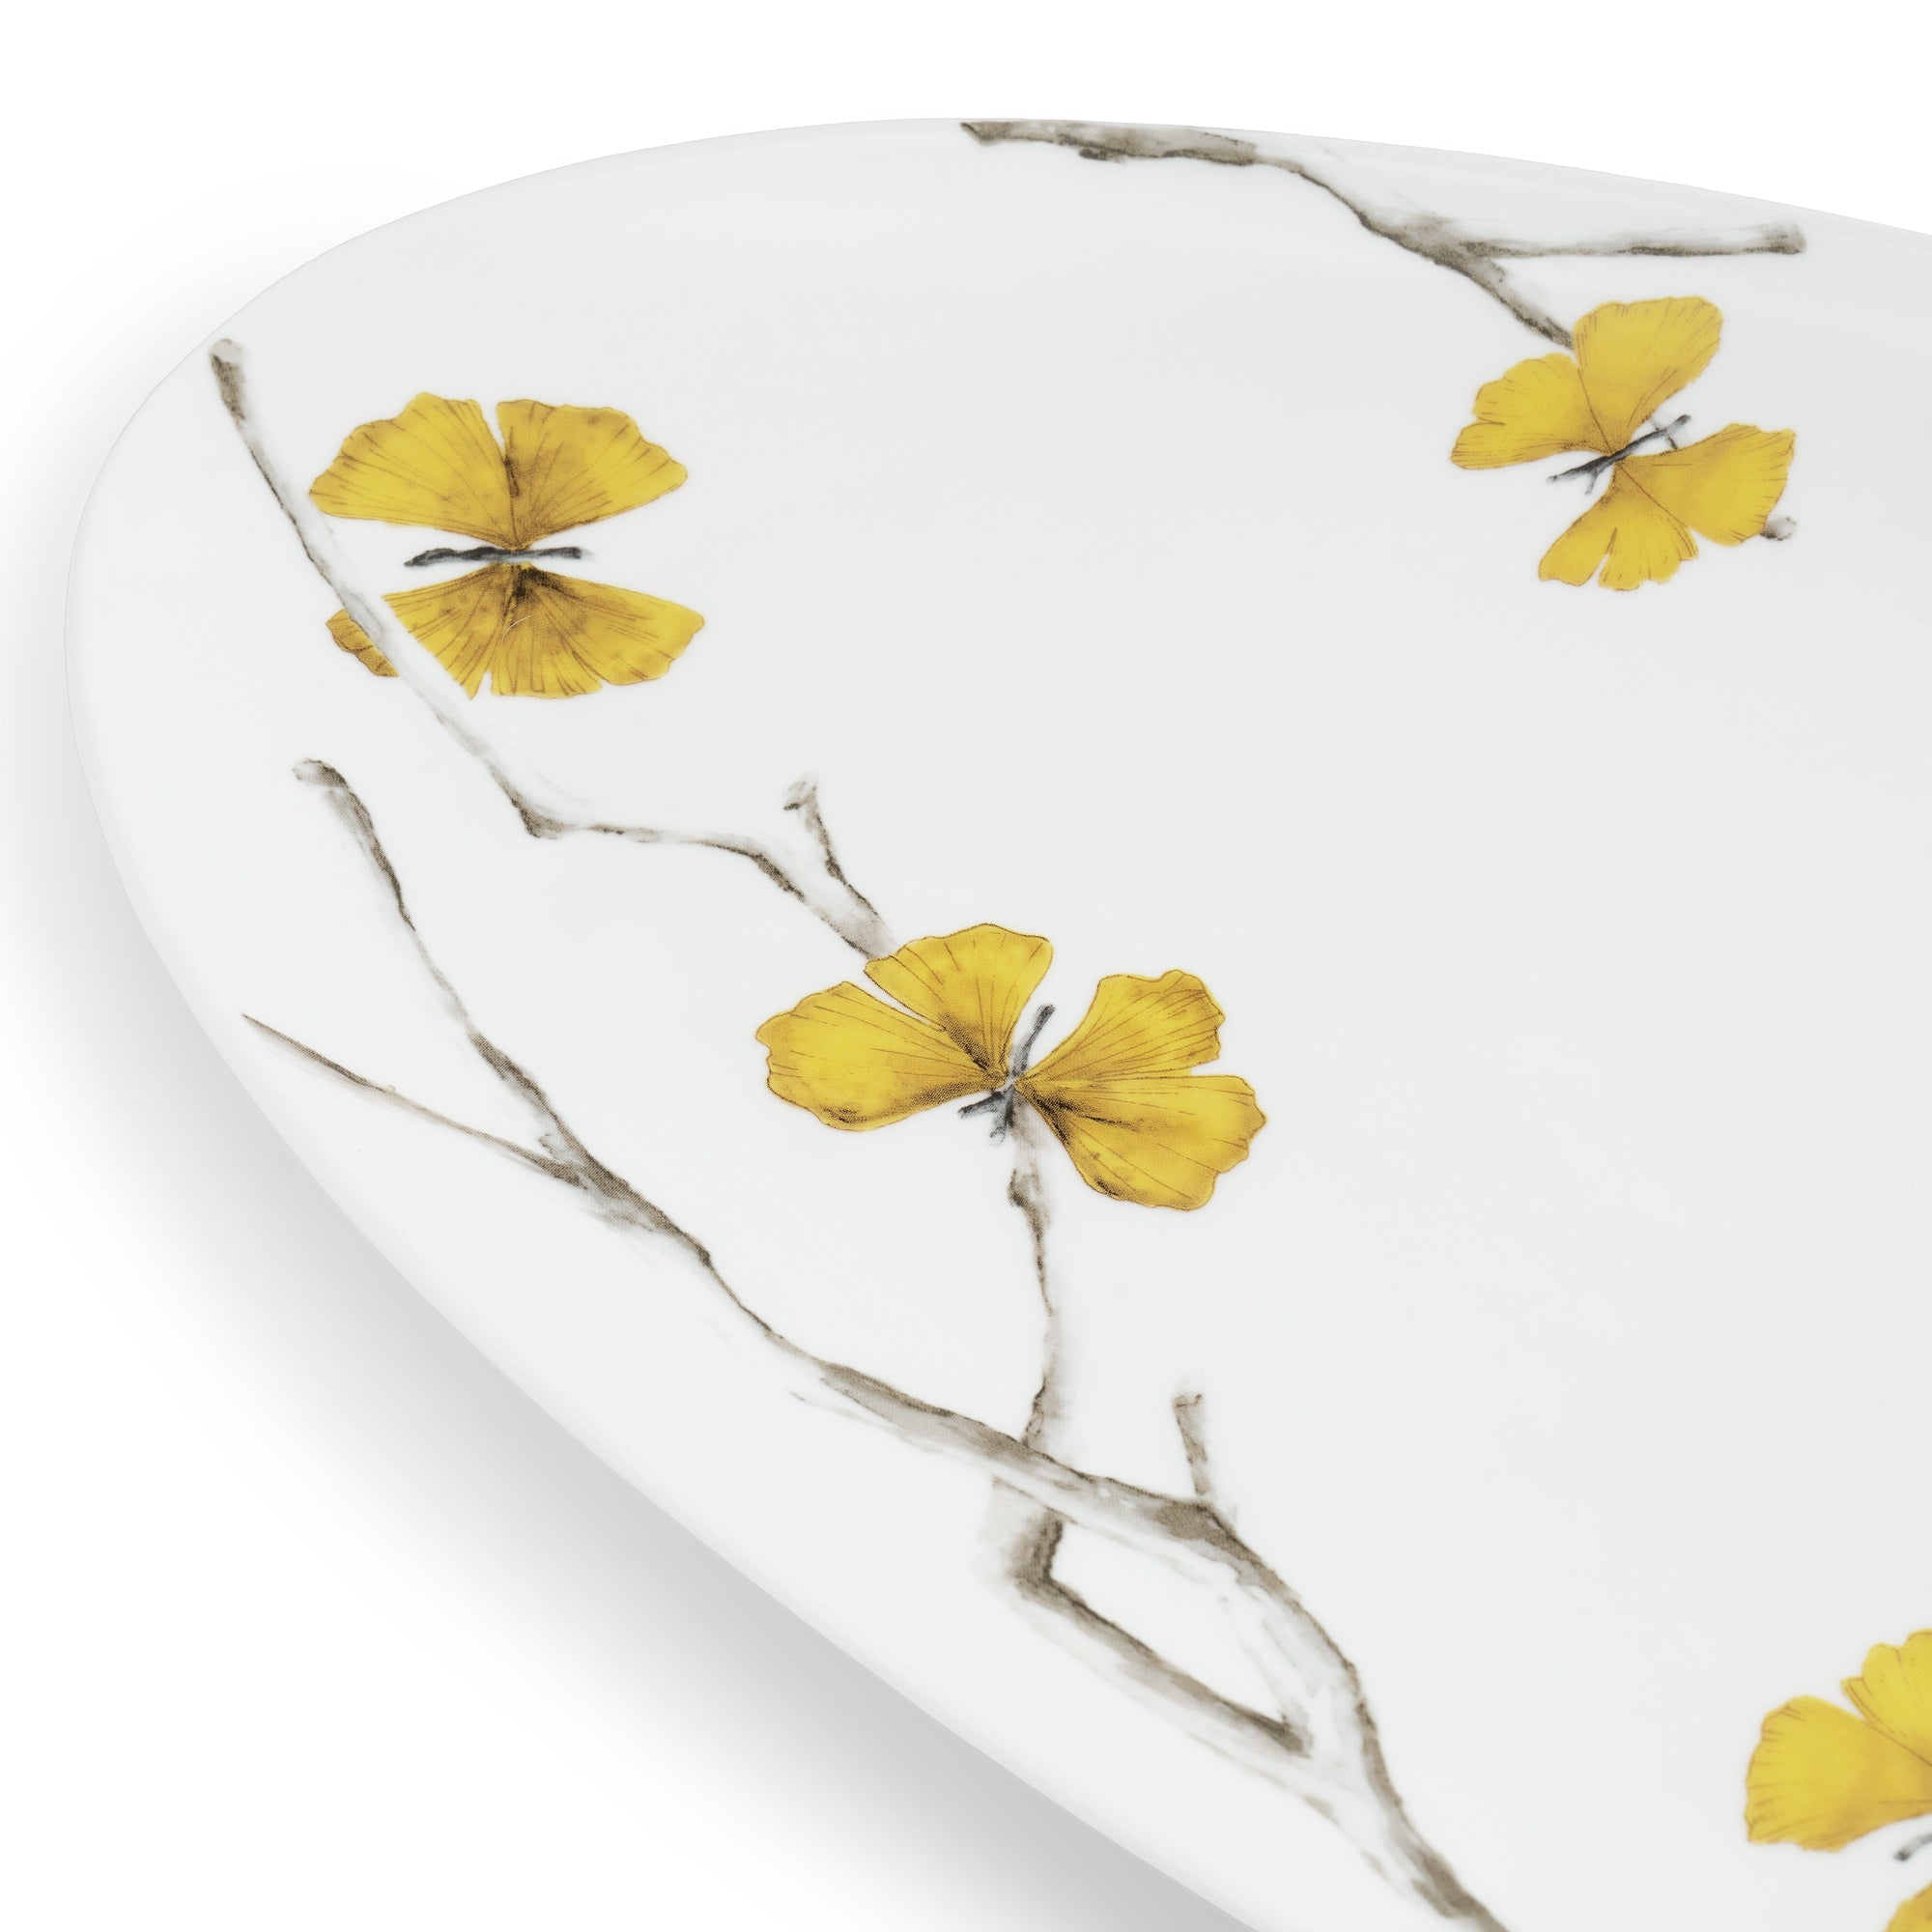 Michael Aram Butterfly Ginkgo Porcelain Platter